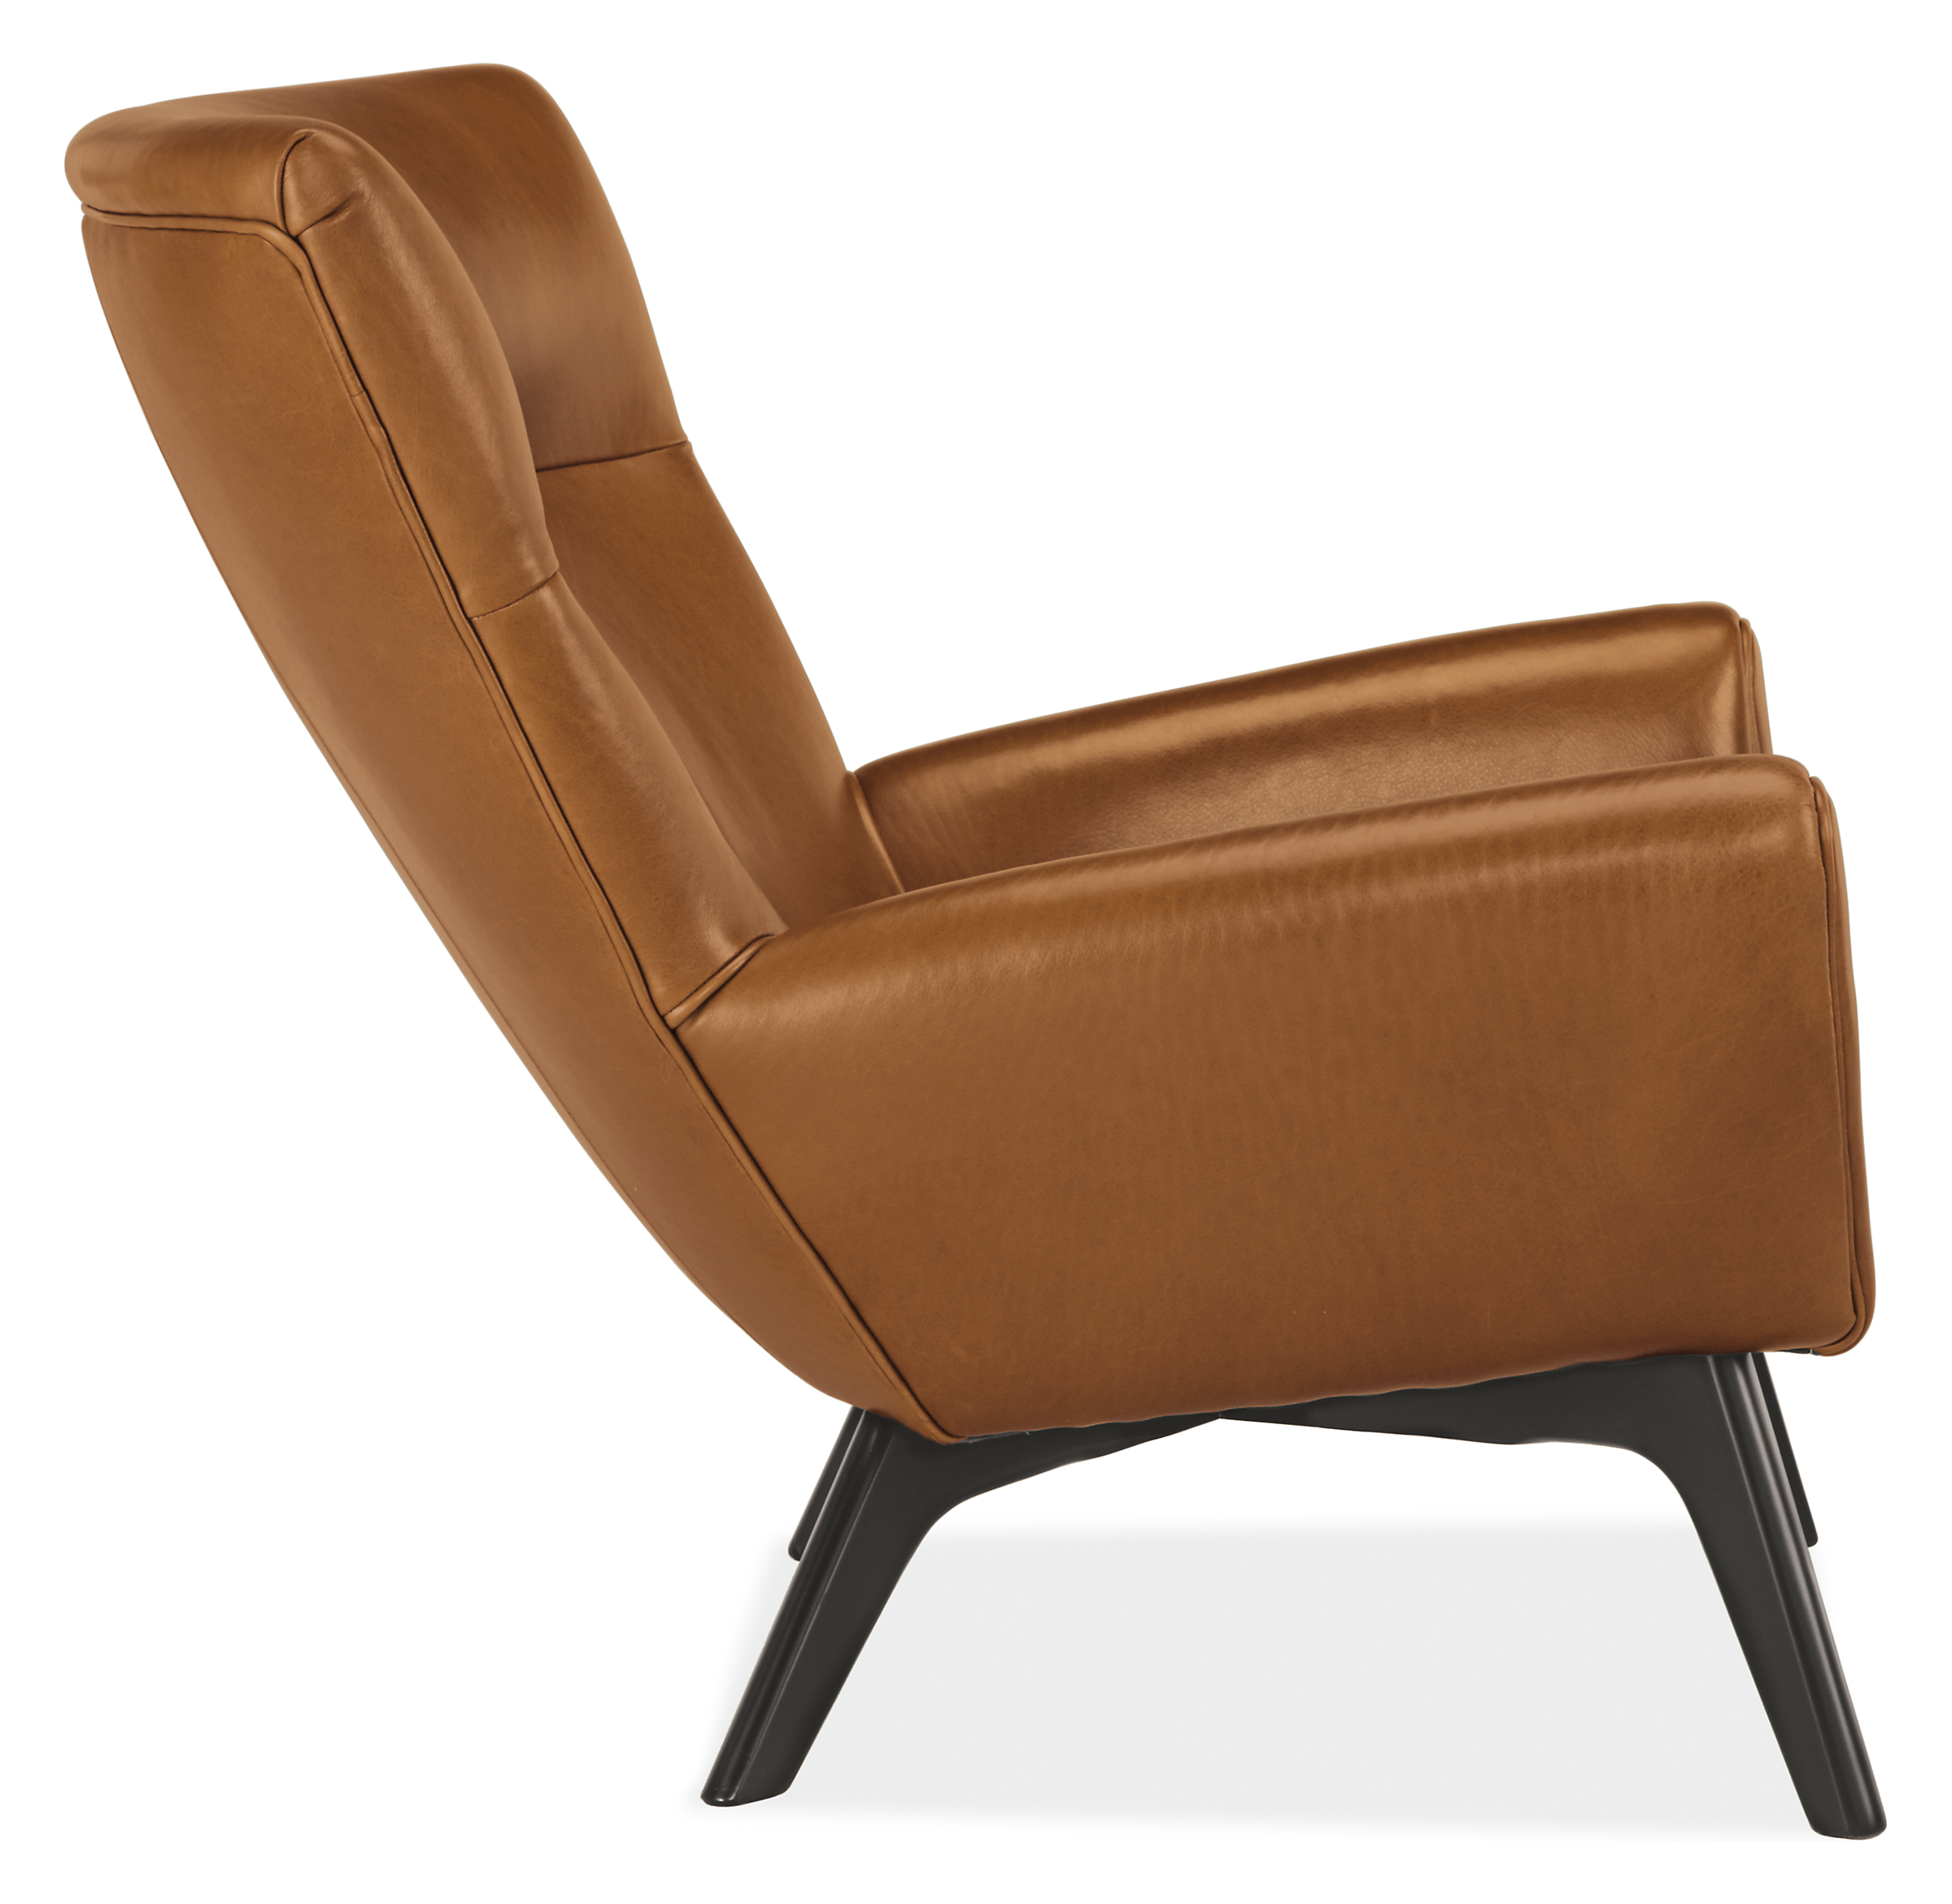 Side view of Boden Chair in Portofino Cognac.